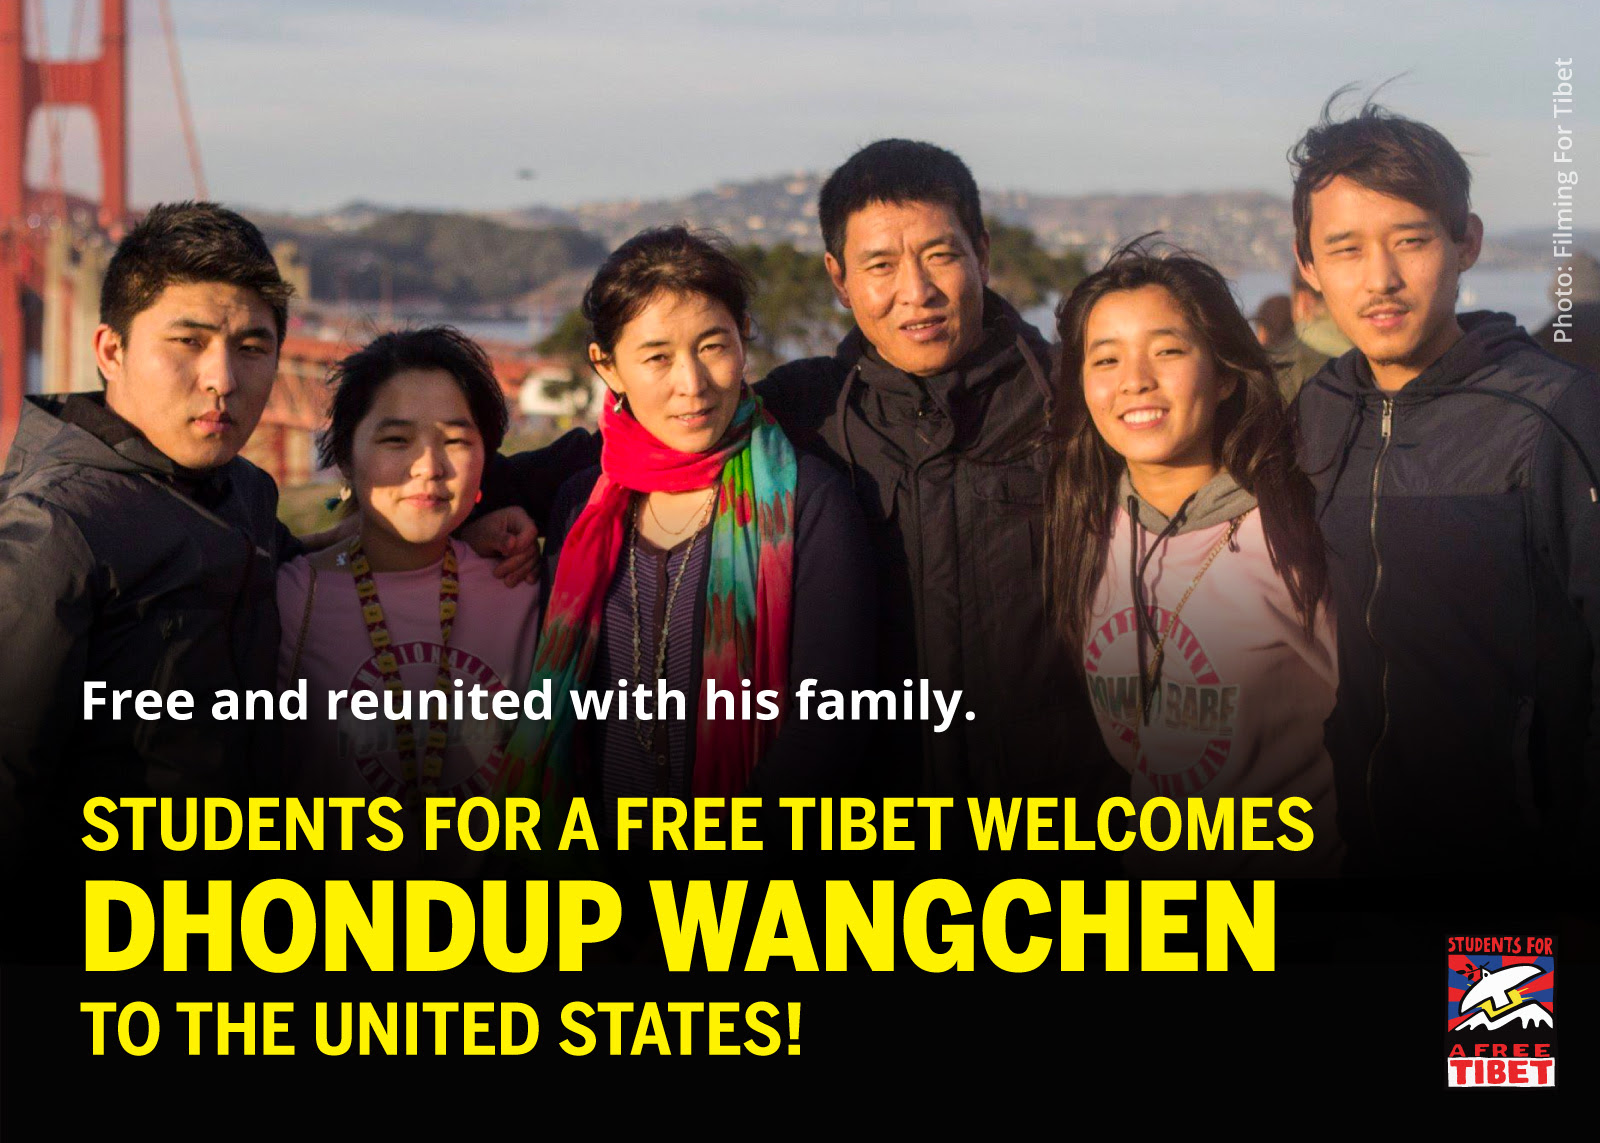 Dhondup Wangchenは彼の妻Lhamo Tsoと子どもと再会した